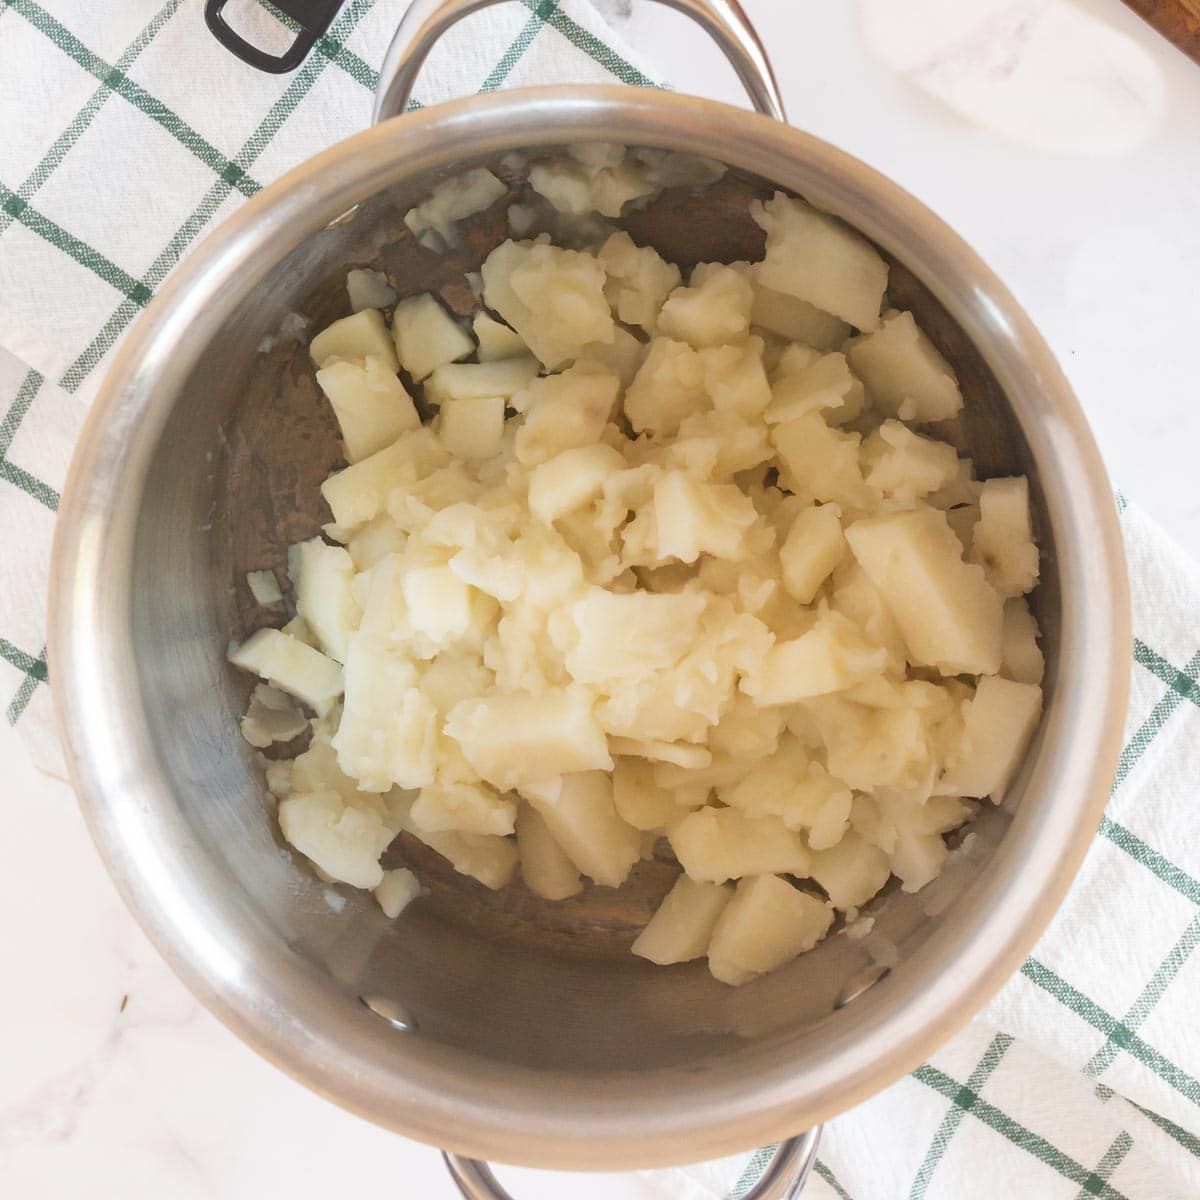 Puré de patata bullit en una olla